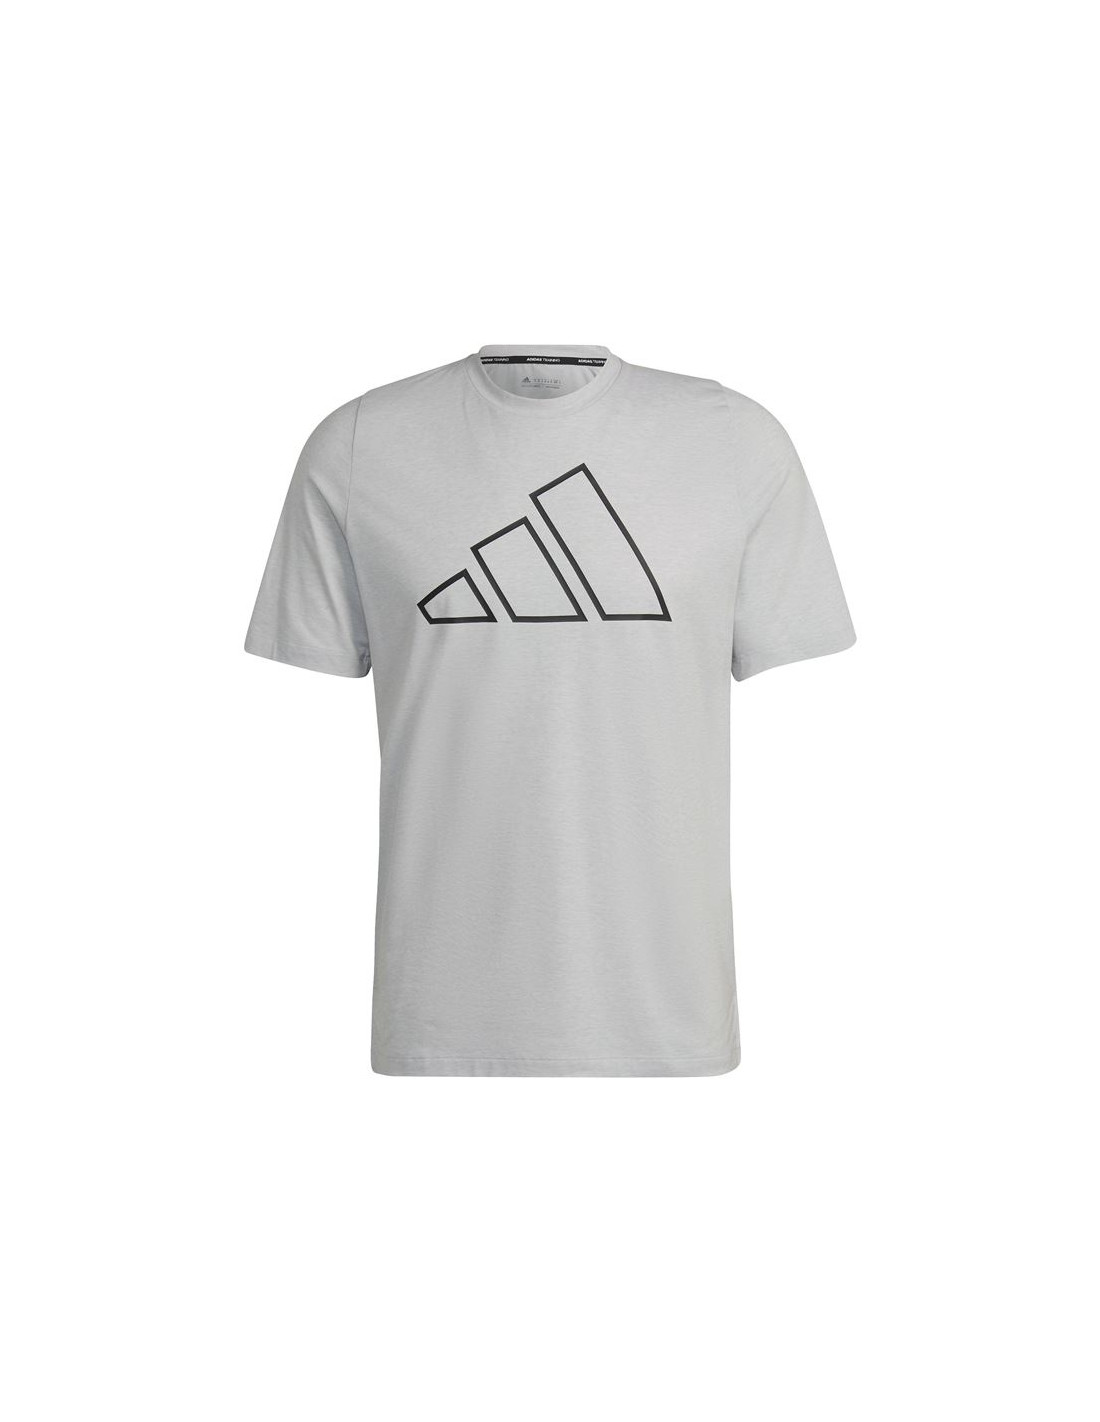 Camiseta adidas train icons 3 bands hombre grey